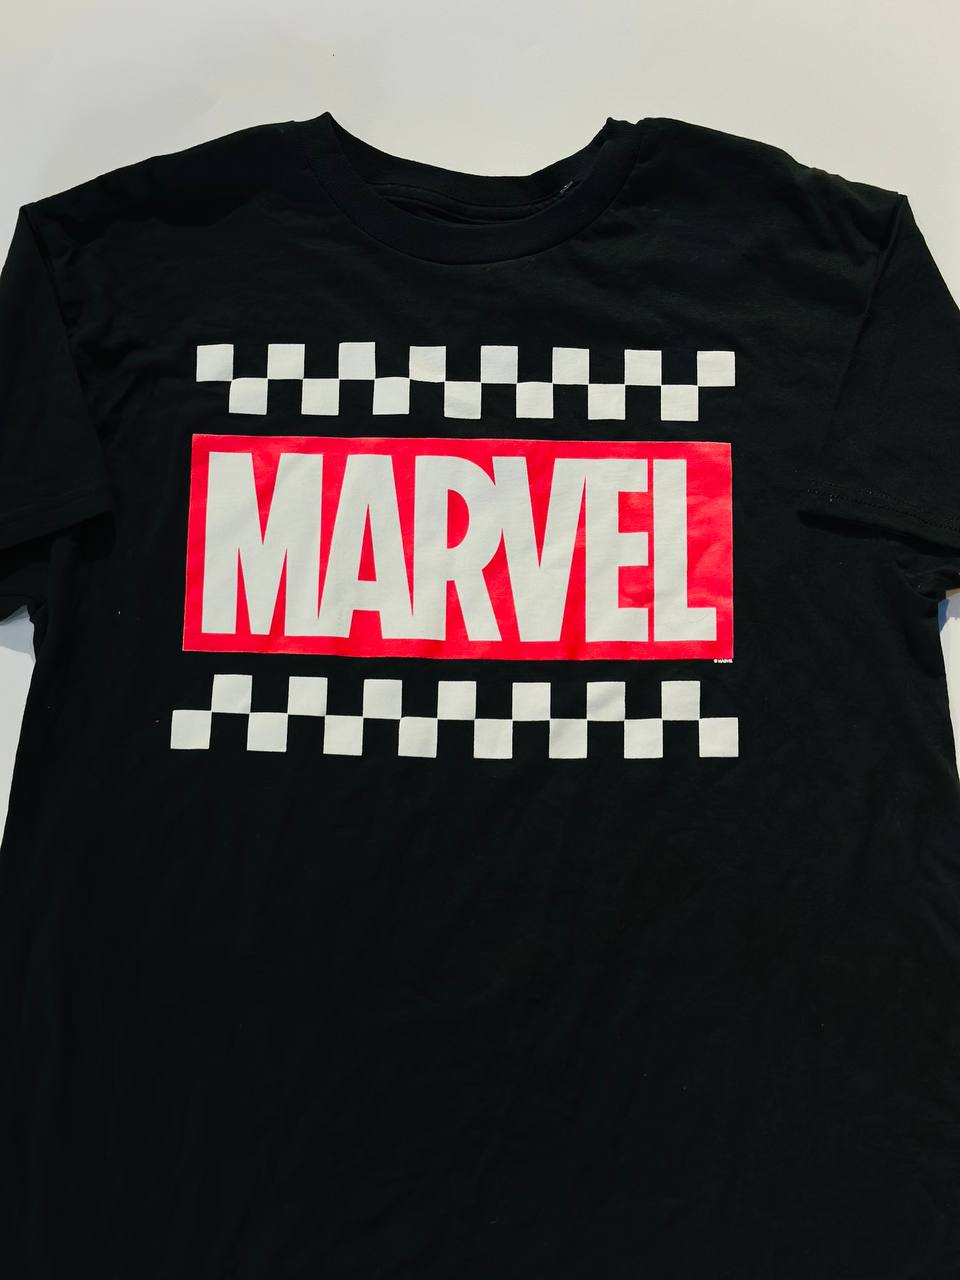 Marvel kids shirt